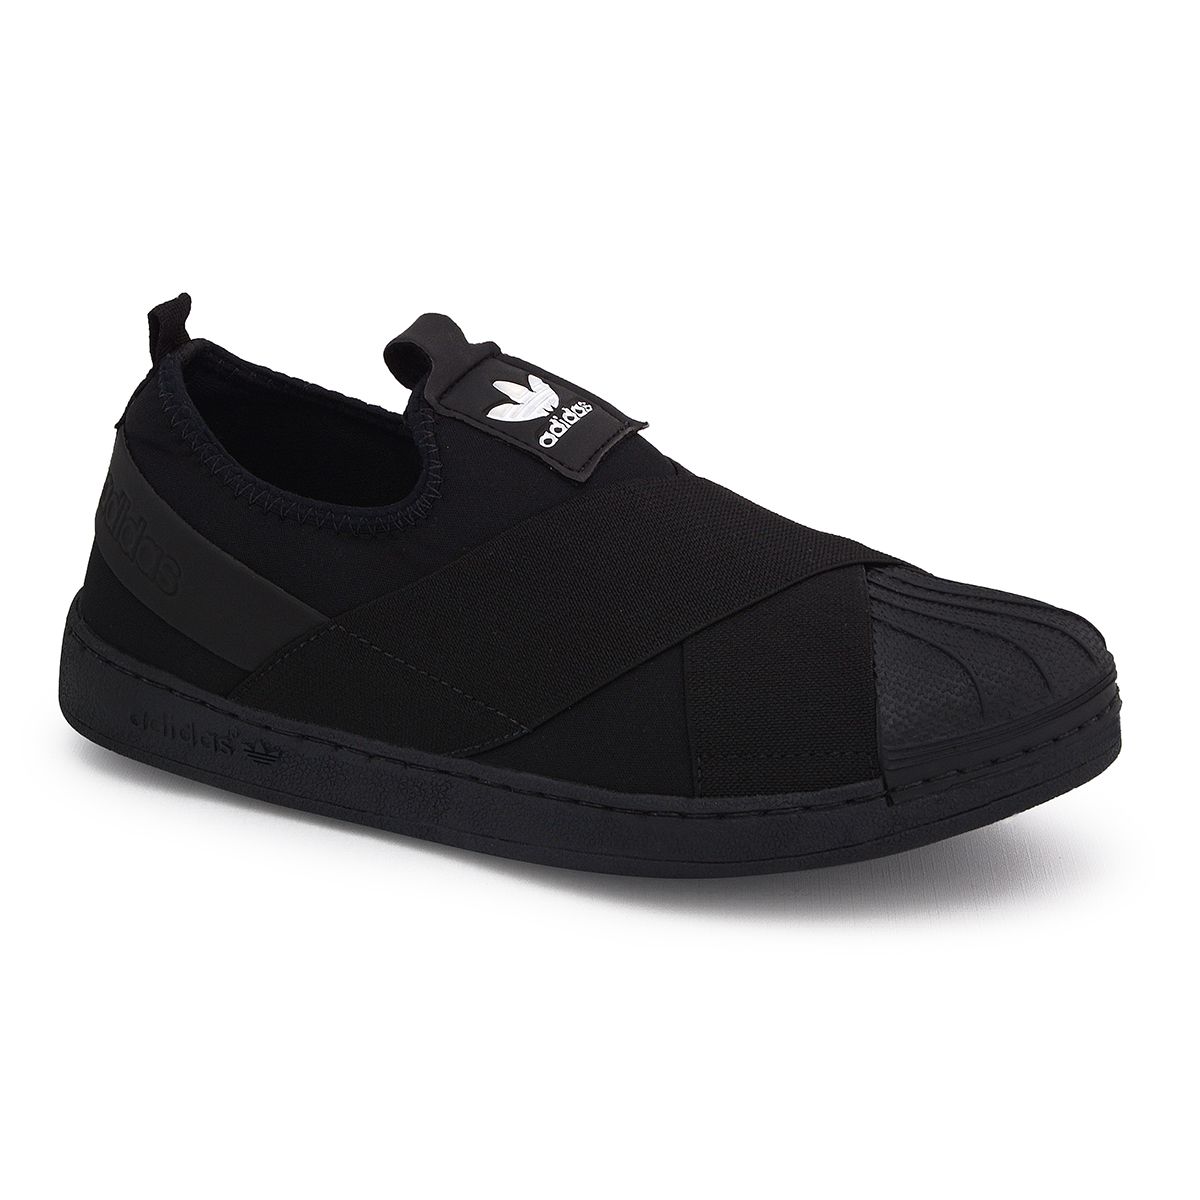 Adidas Slip On preto - M.Shoes Imports